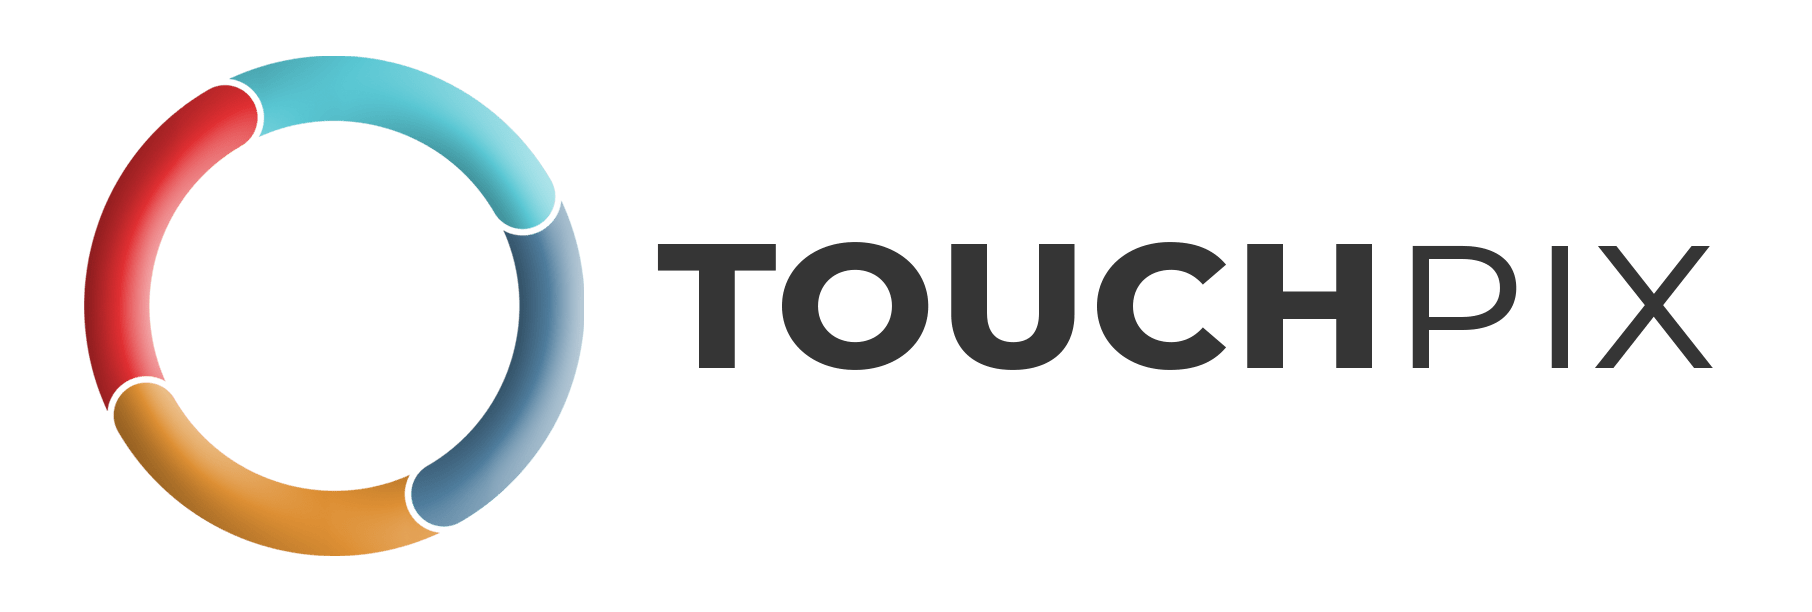 Touchpix